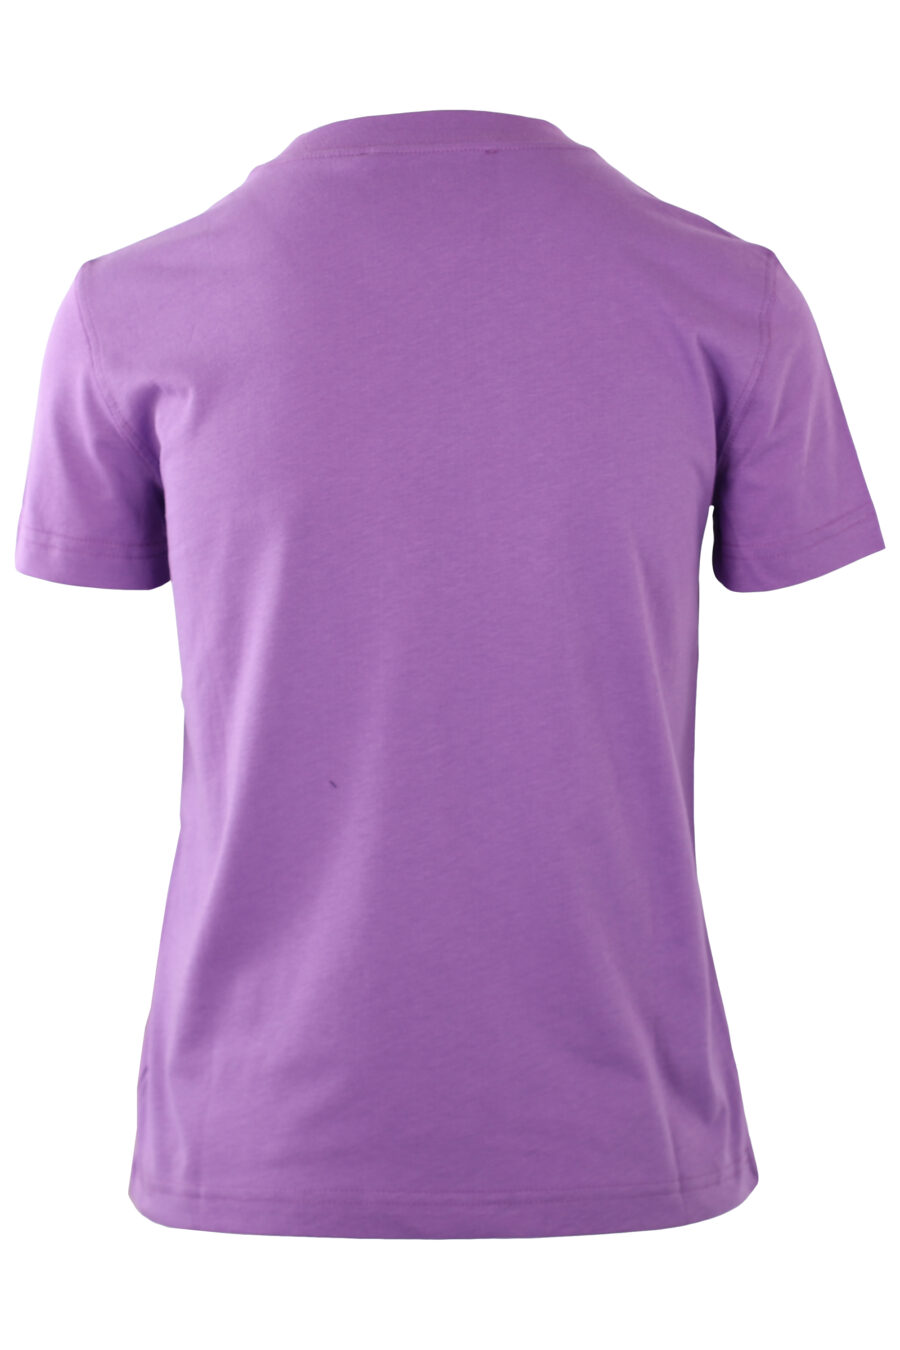 Lila T-Shirt mit einfarbigem, rundem Logo - IMG 0232